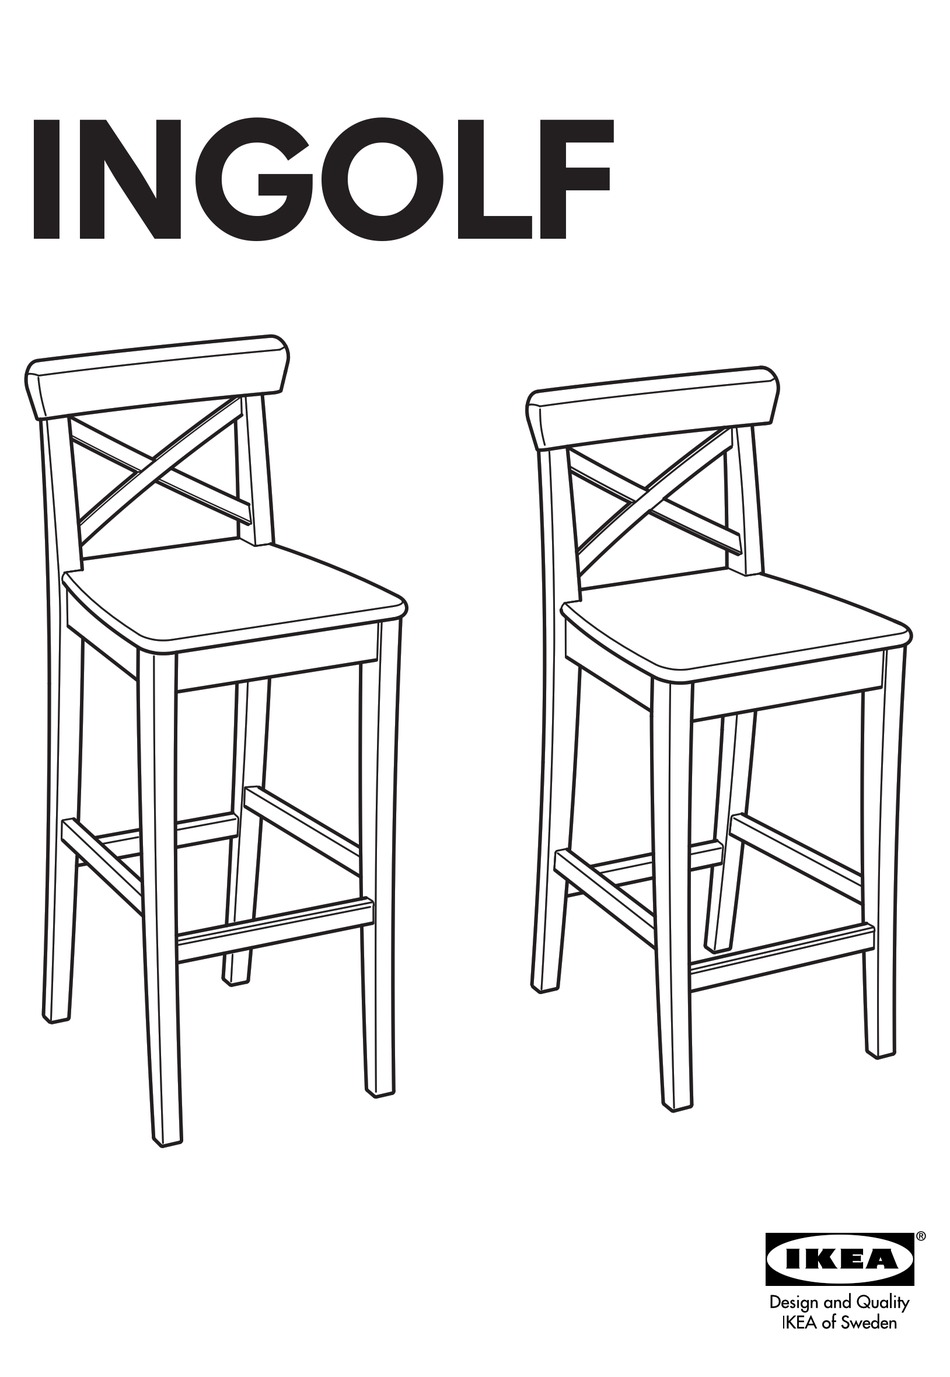 Ikea Ingolf Bar Stool W Backrest 24 3 4, Ingolf Bar Stool